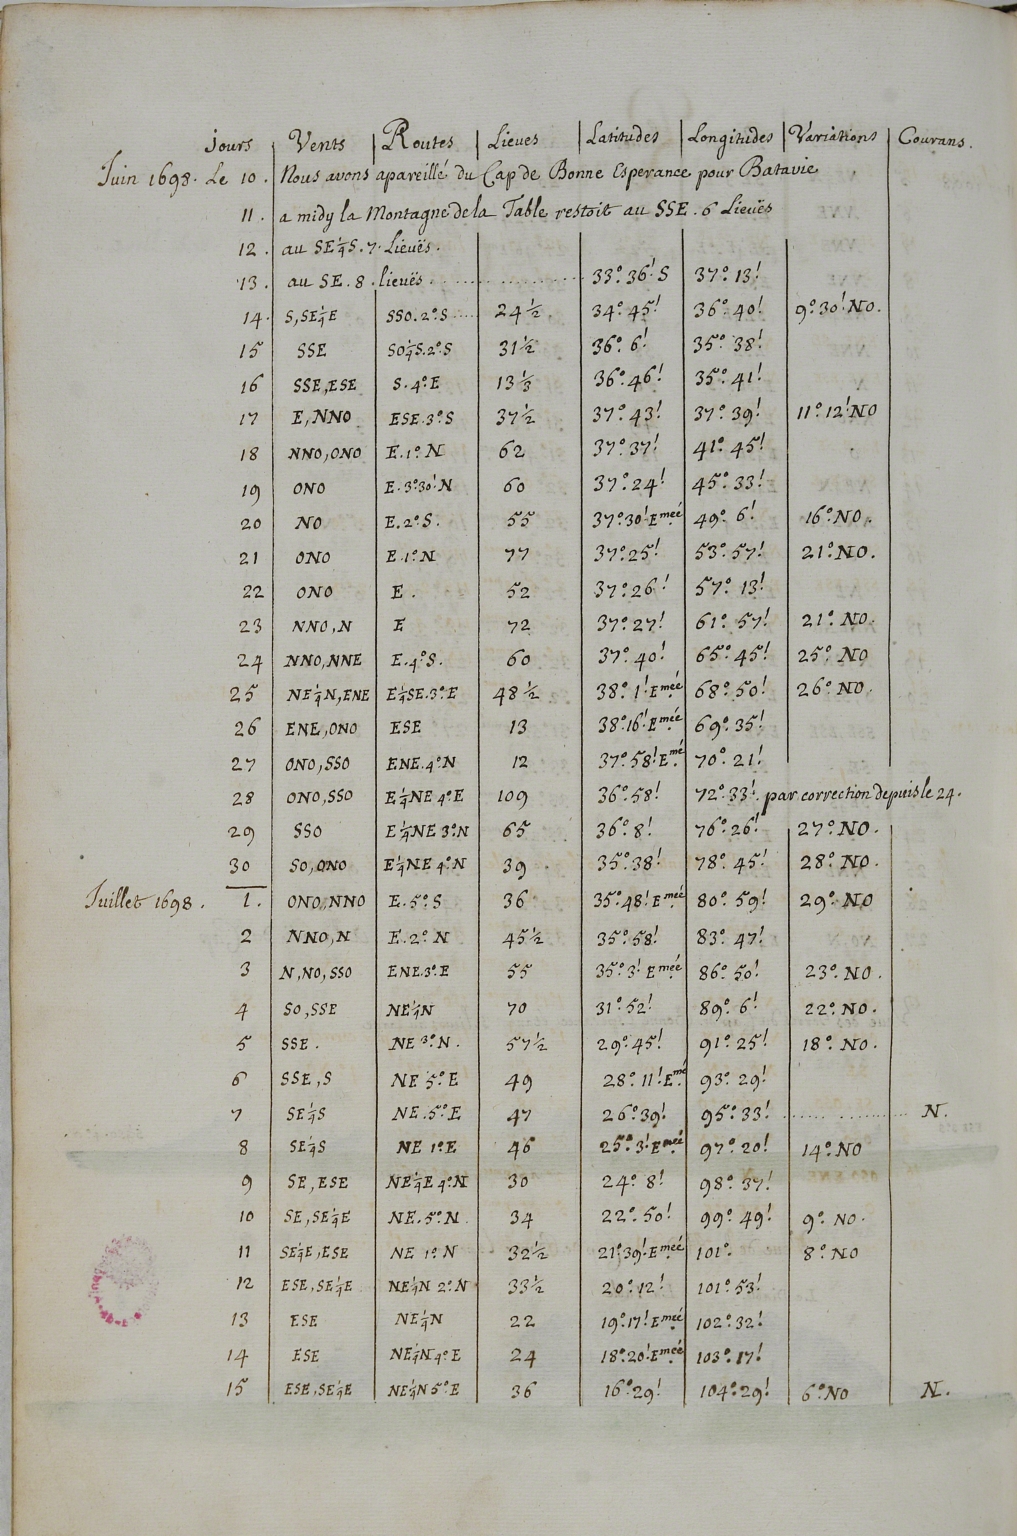 [Table of jours, vents, routes, lieuës, latitudes, longitudes, variantions and courans, Juin and Juillet 1698].